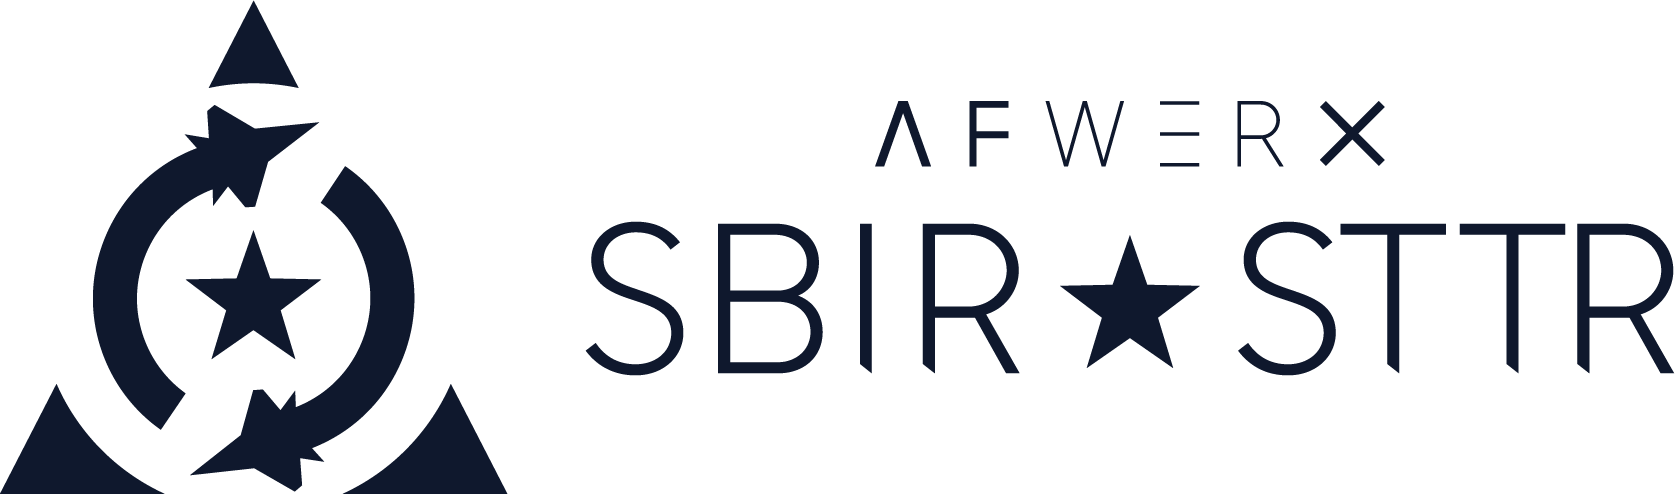 AFWERX Logo